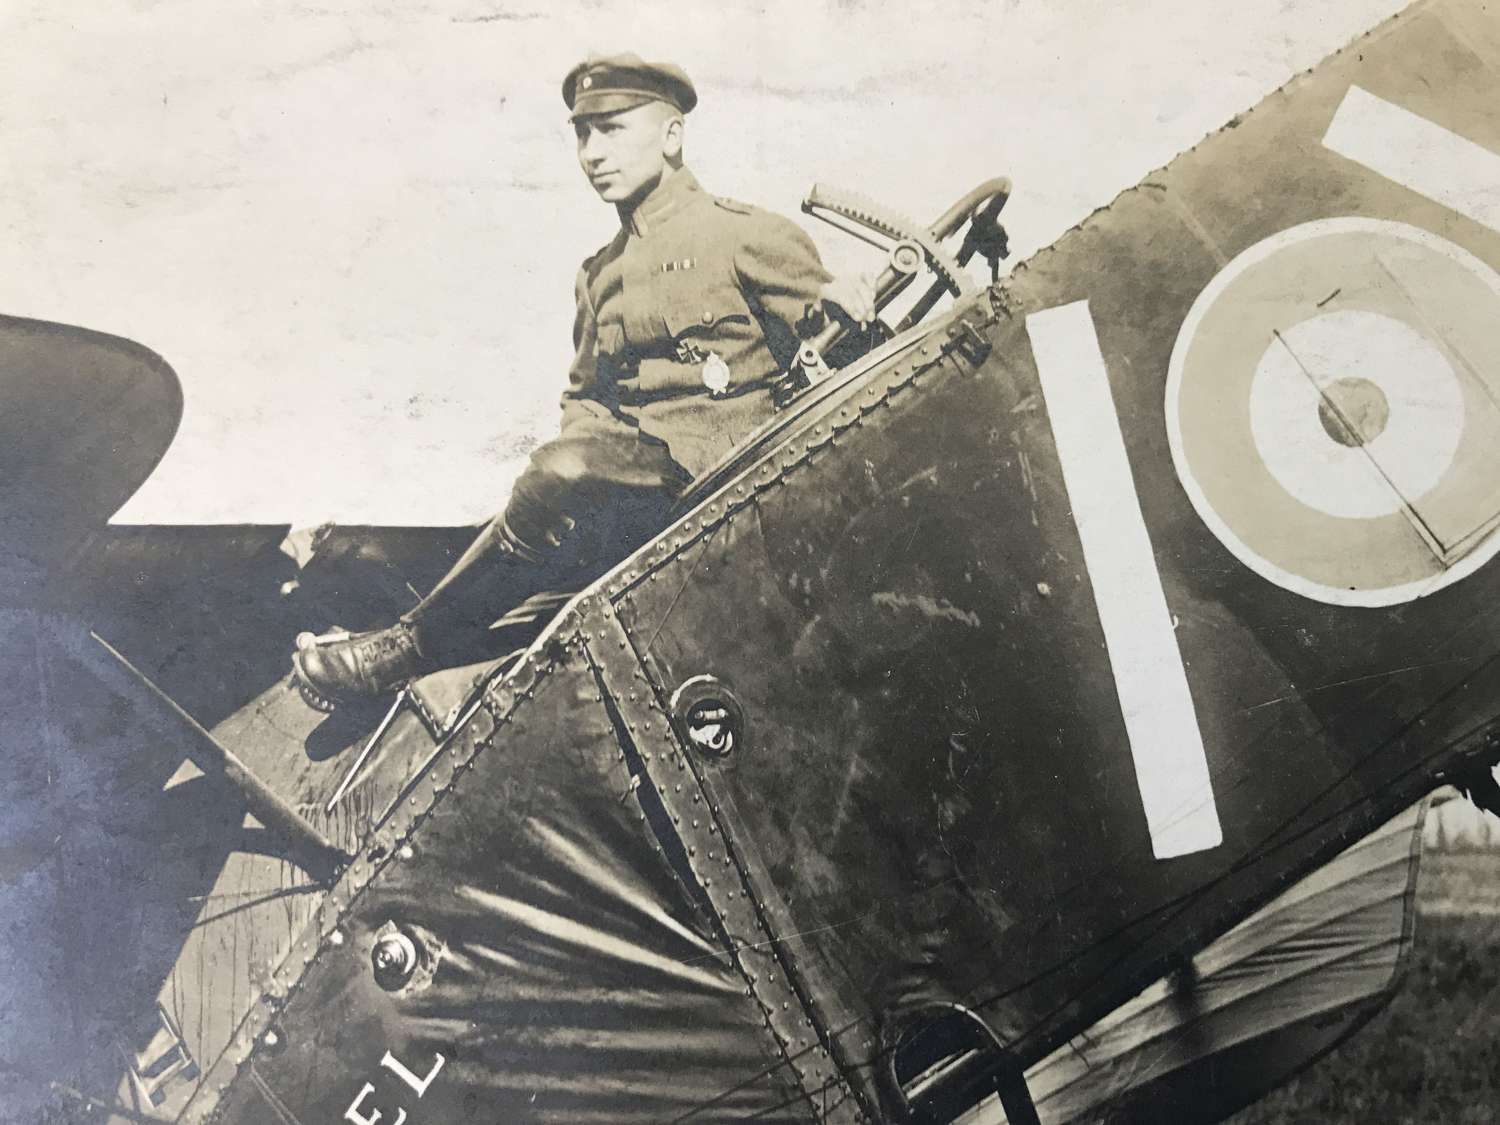 A Postcard Of a German pilot sitting on a Bristol fighter